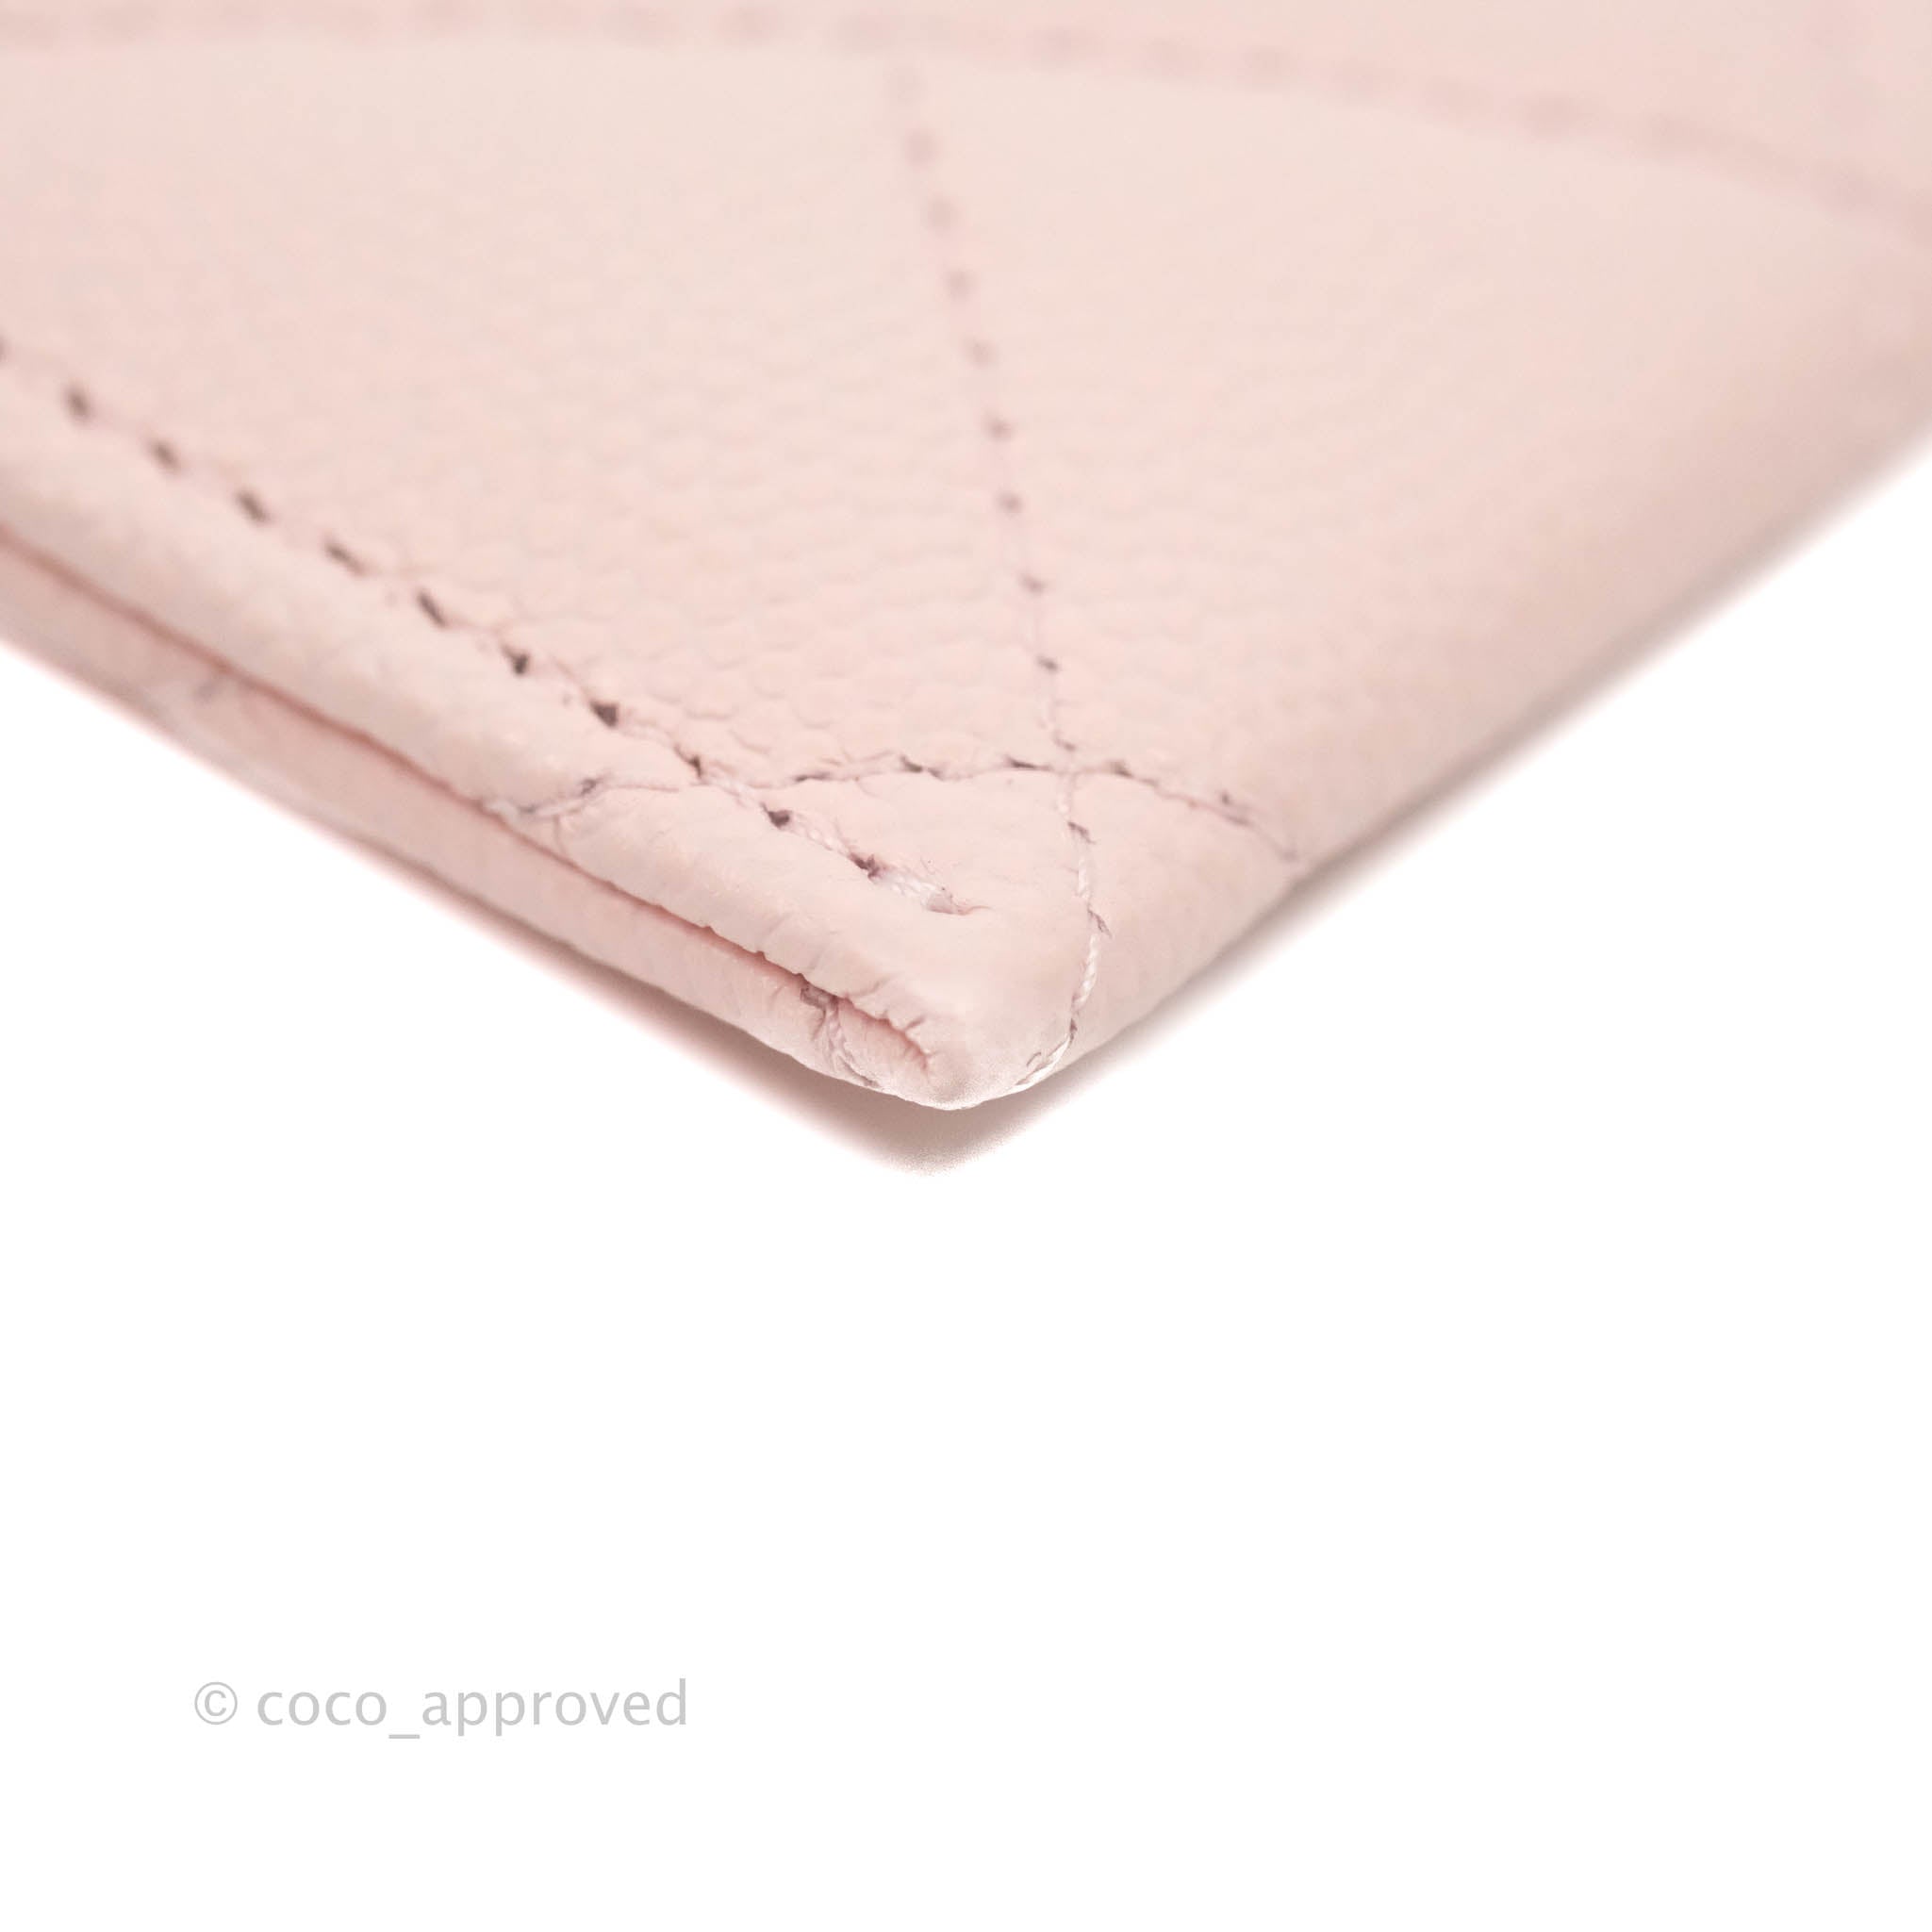 Chanel - 22C Pink Flat Cardholder – smccpourtoi